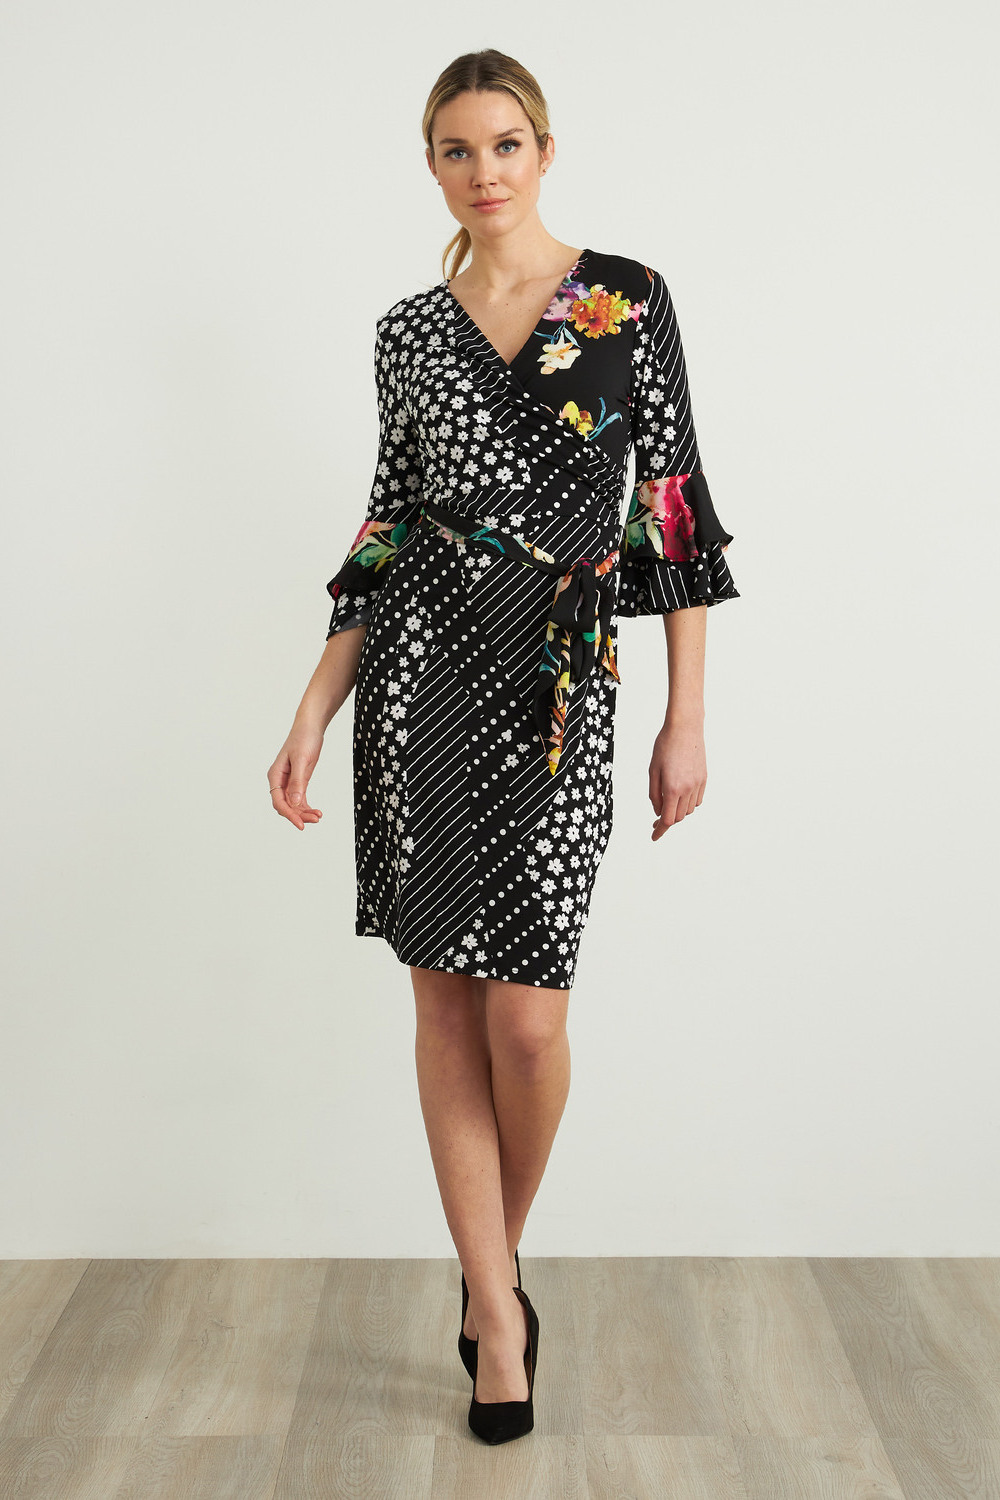 Joseph Ribkoff Floral Print Bell Sleeve Dress Style 212190. Black/white